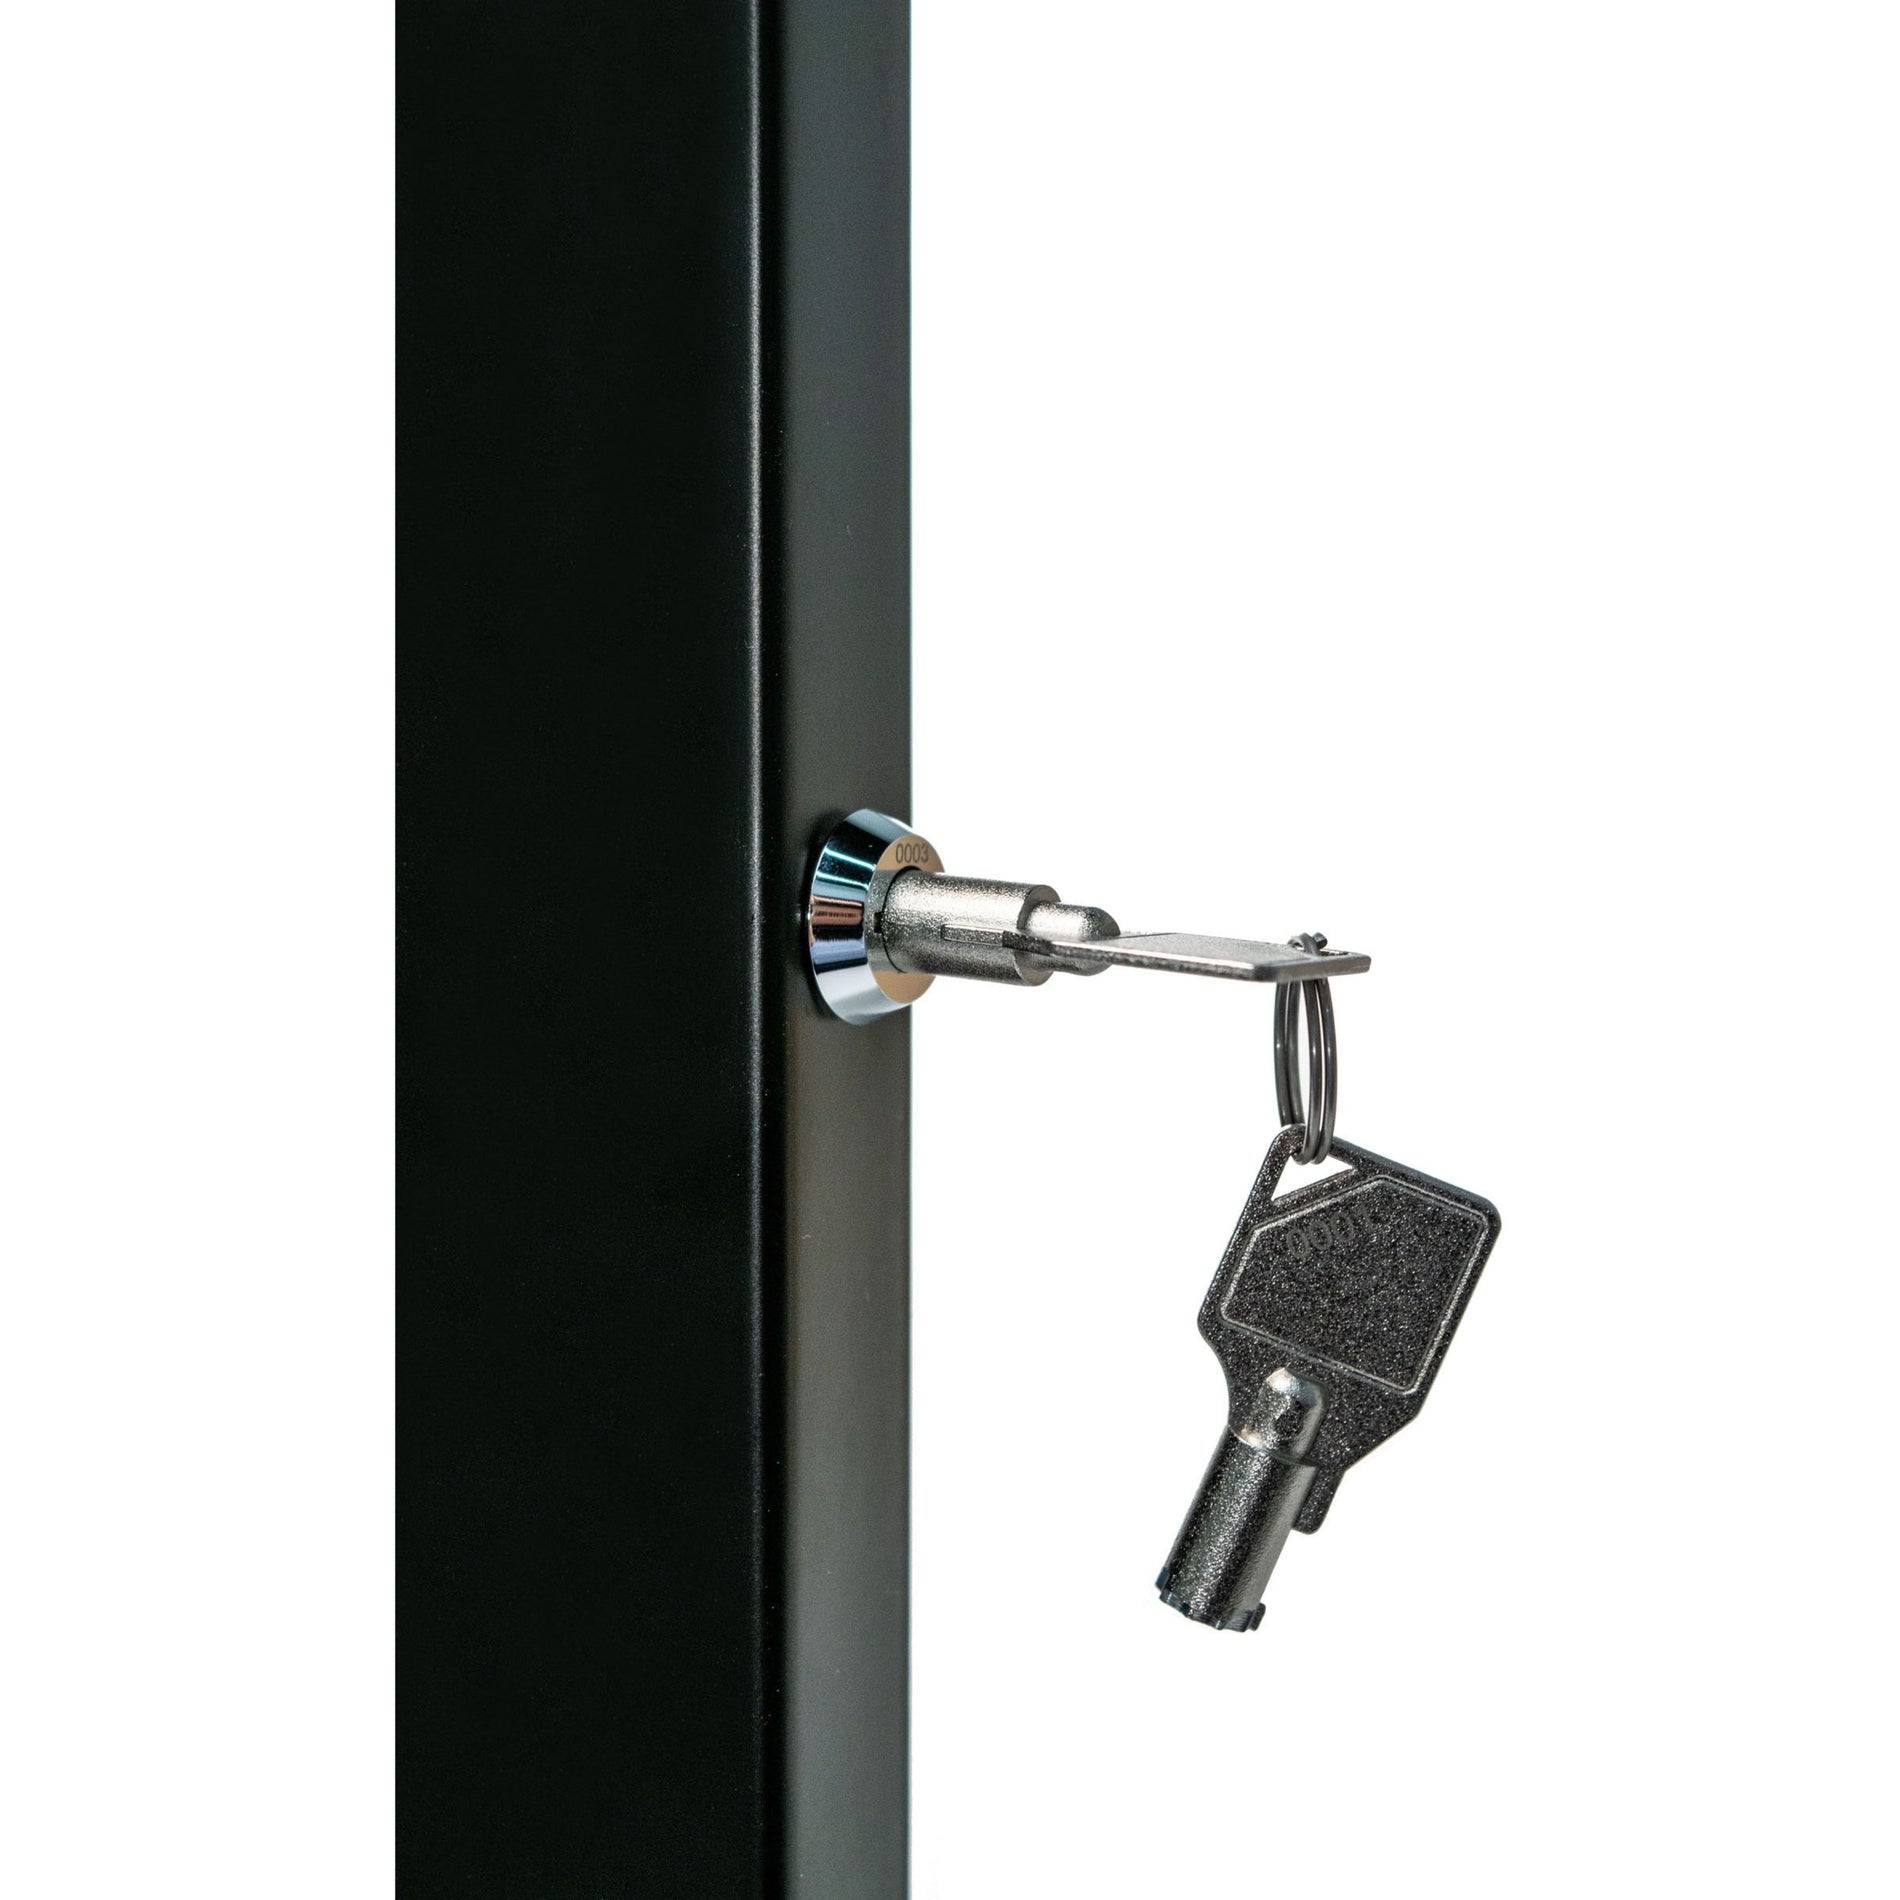 CTA Digital PAD-PLWB Premium Large Locking Wall Mount (Black), Heavy Duty, Theft Resistant, Cable Management